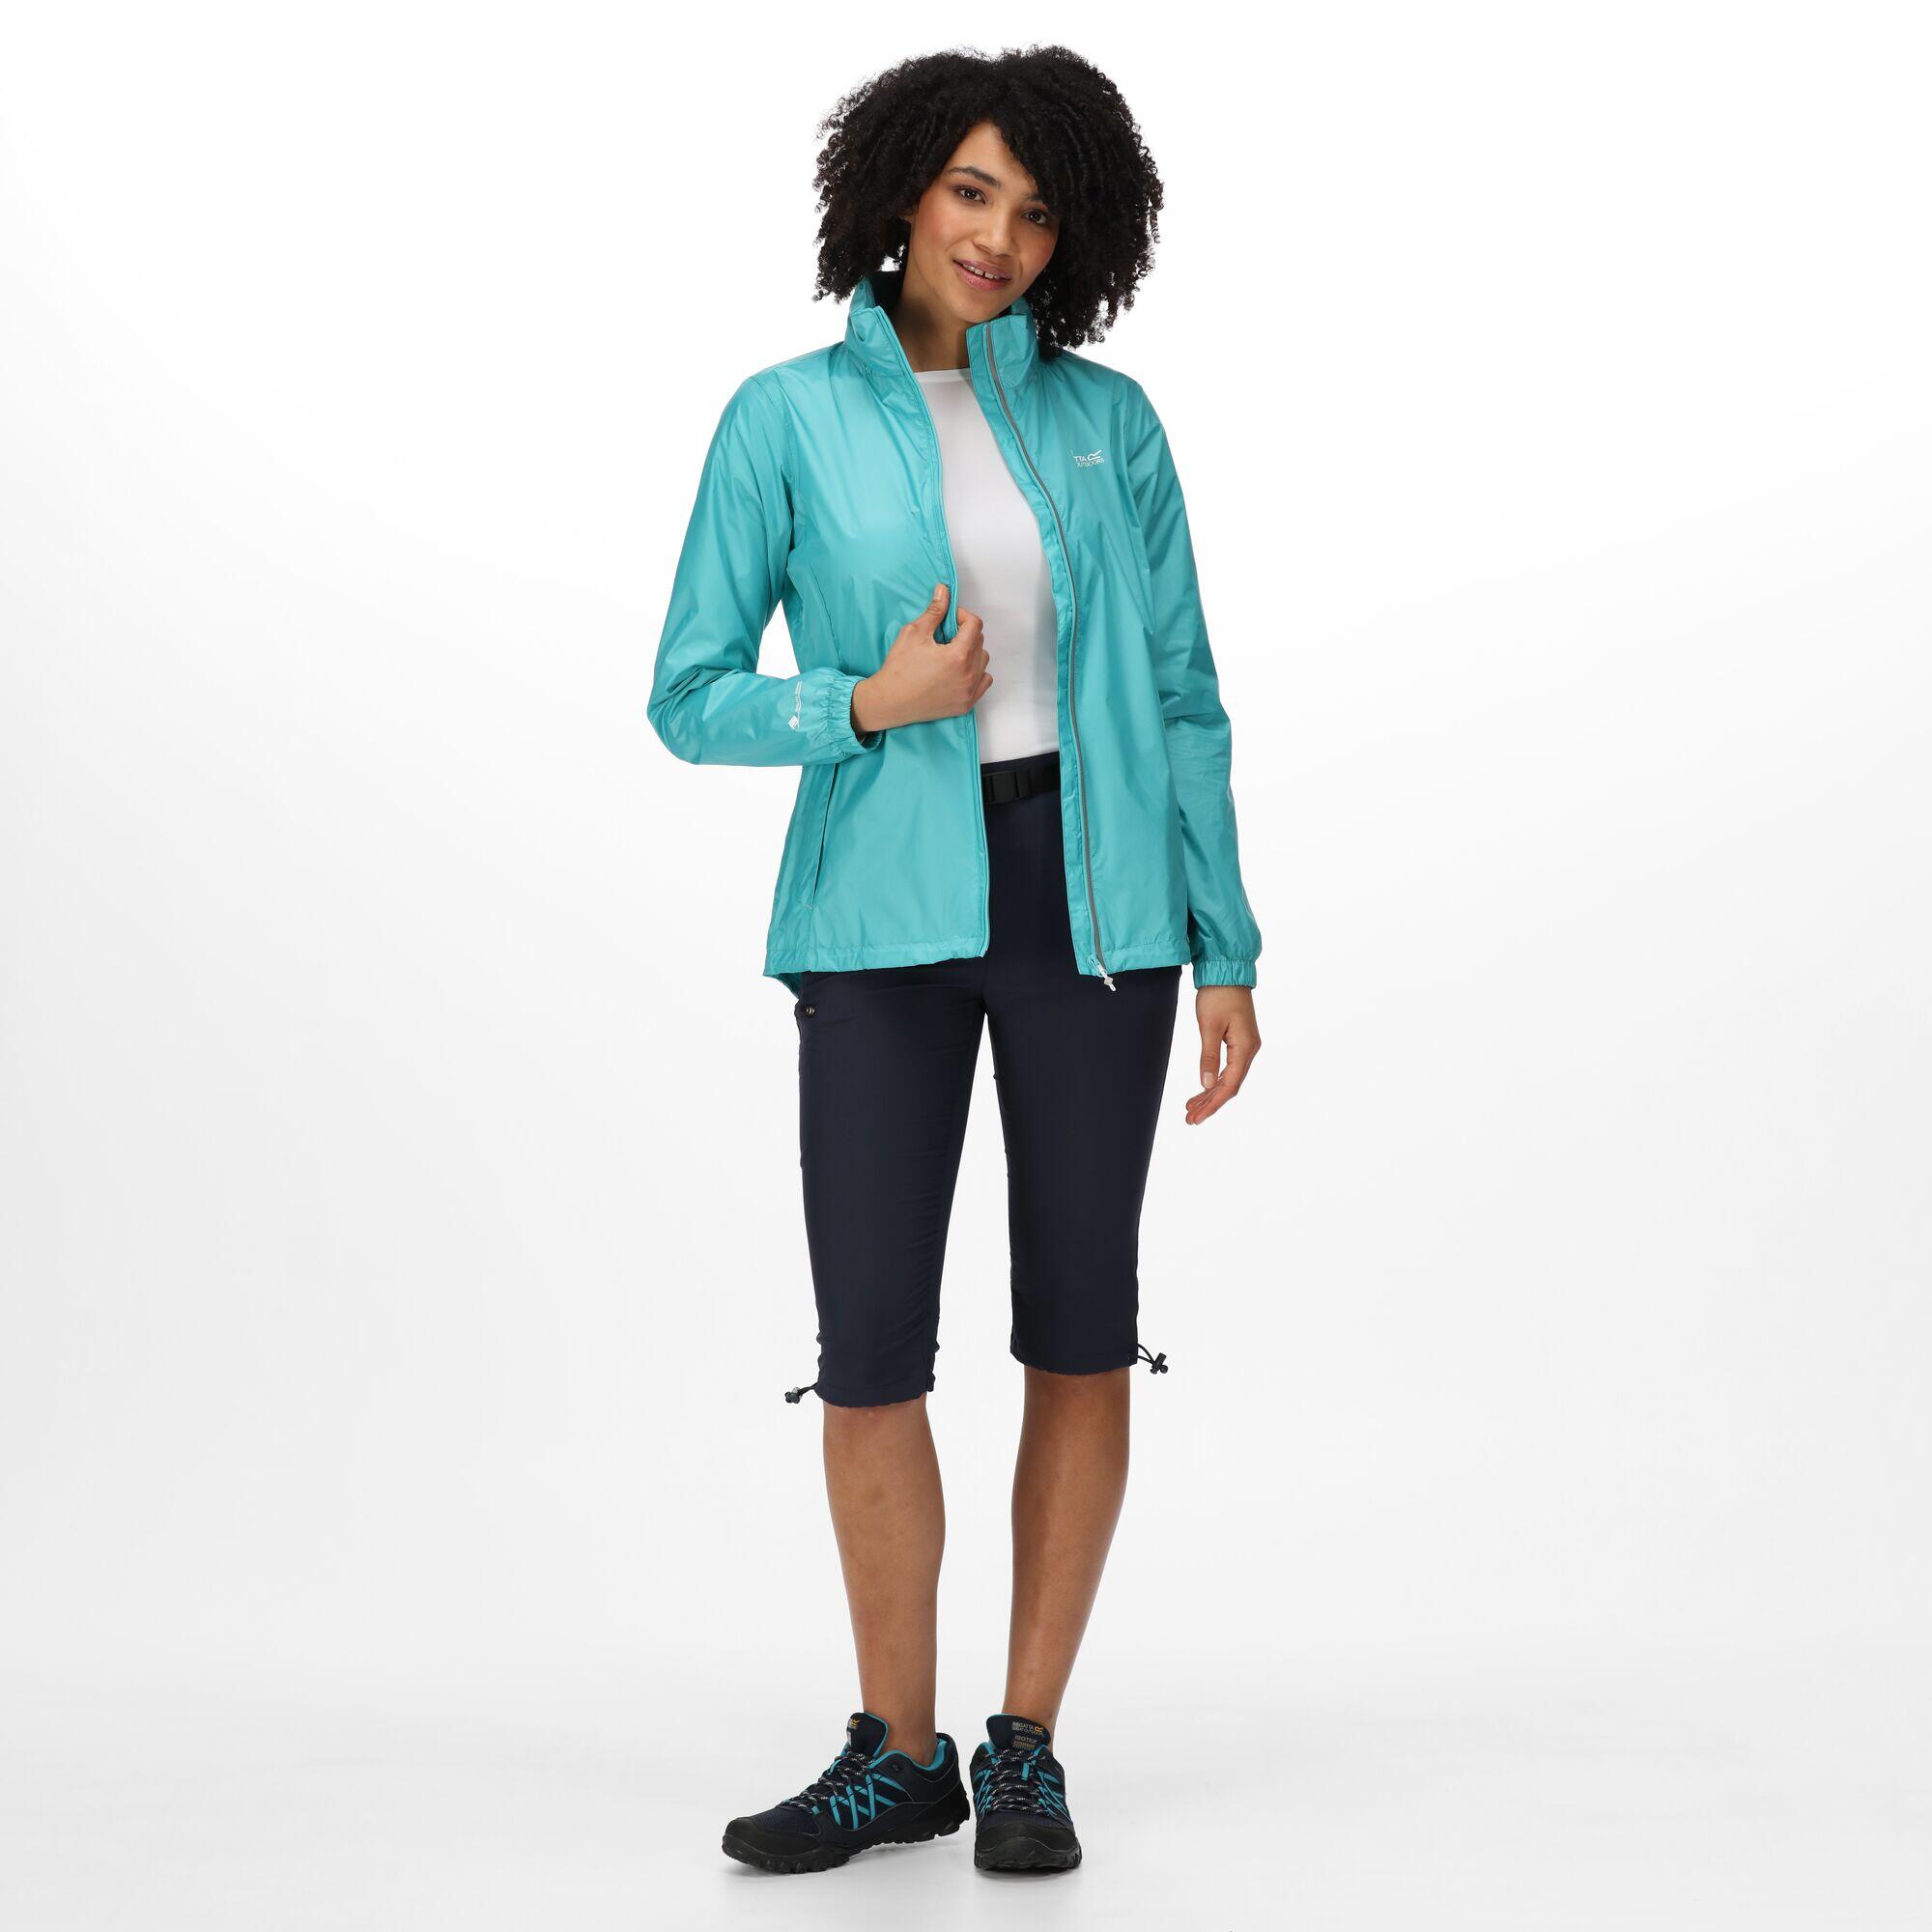 Corinne IV Women's Fitness Waterproof Rain Jacket - Turquoise 3/6